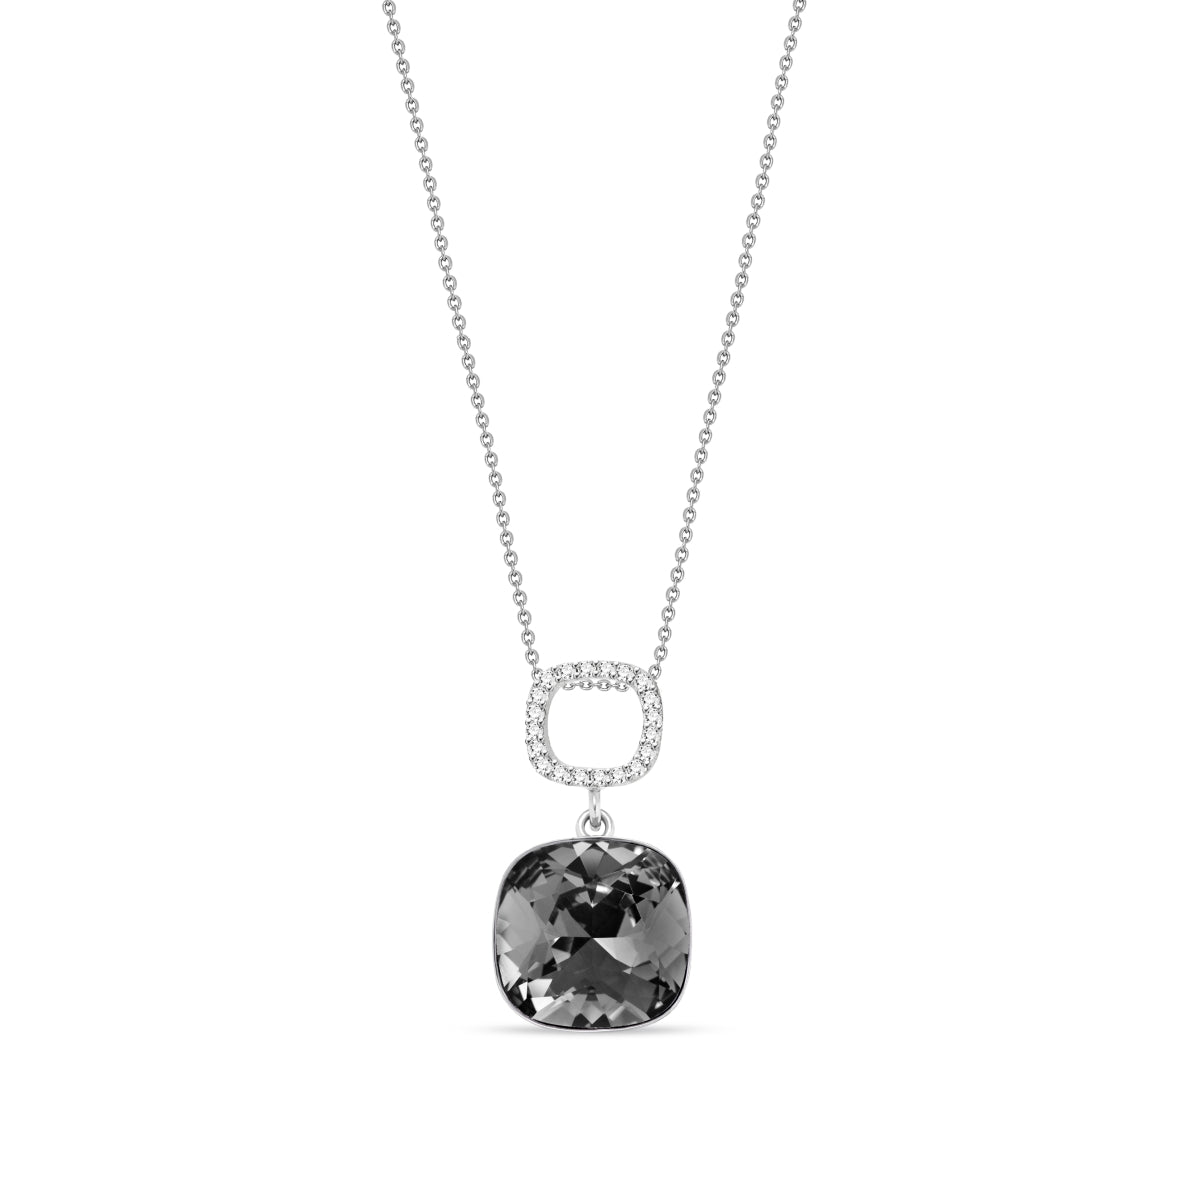 Collar Orbis Crystal - Spark Silver Jewelry